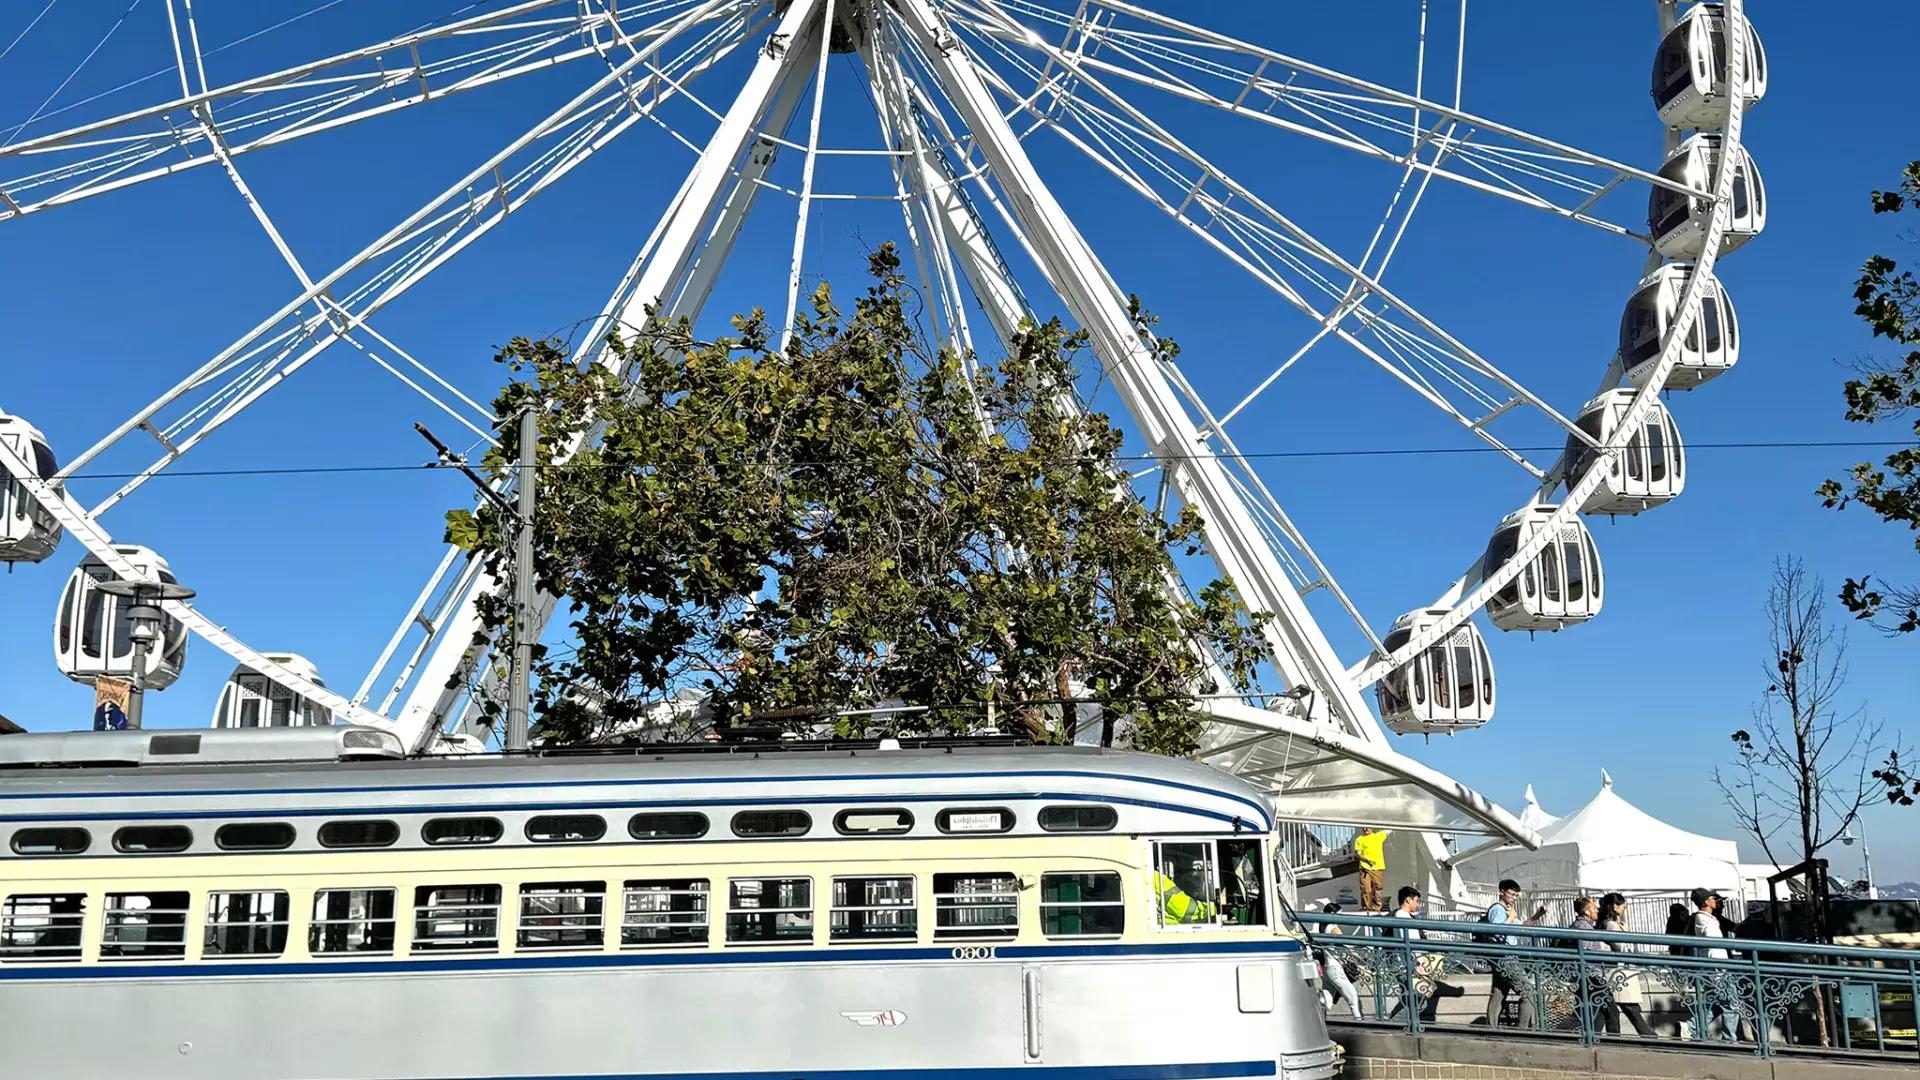 The SkyStar Wheel at Fisherman's Wharf